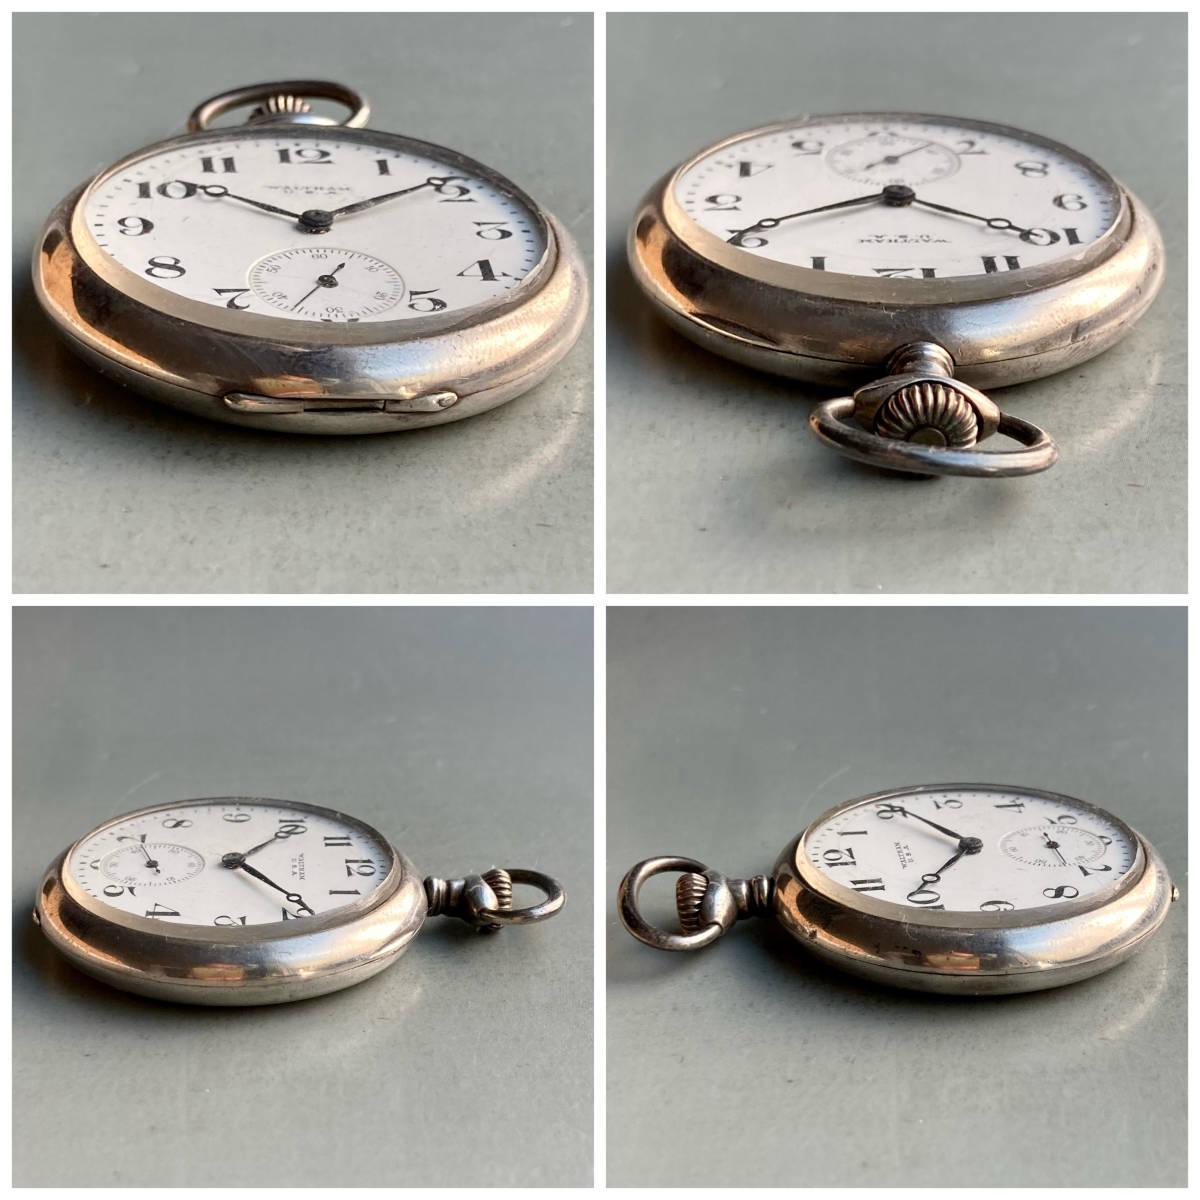 Waltham Pocket Watch Antique Manual Silver Open Face Case Diameter 45mm Vintage - Murphy Johnson Watches Co.